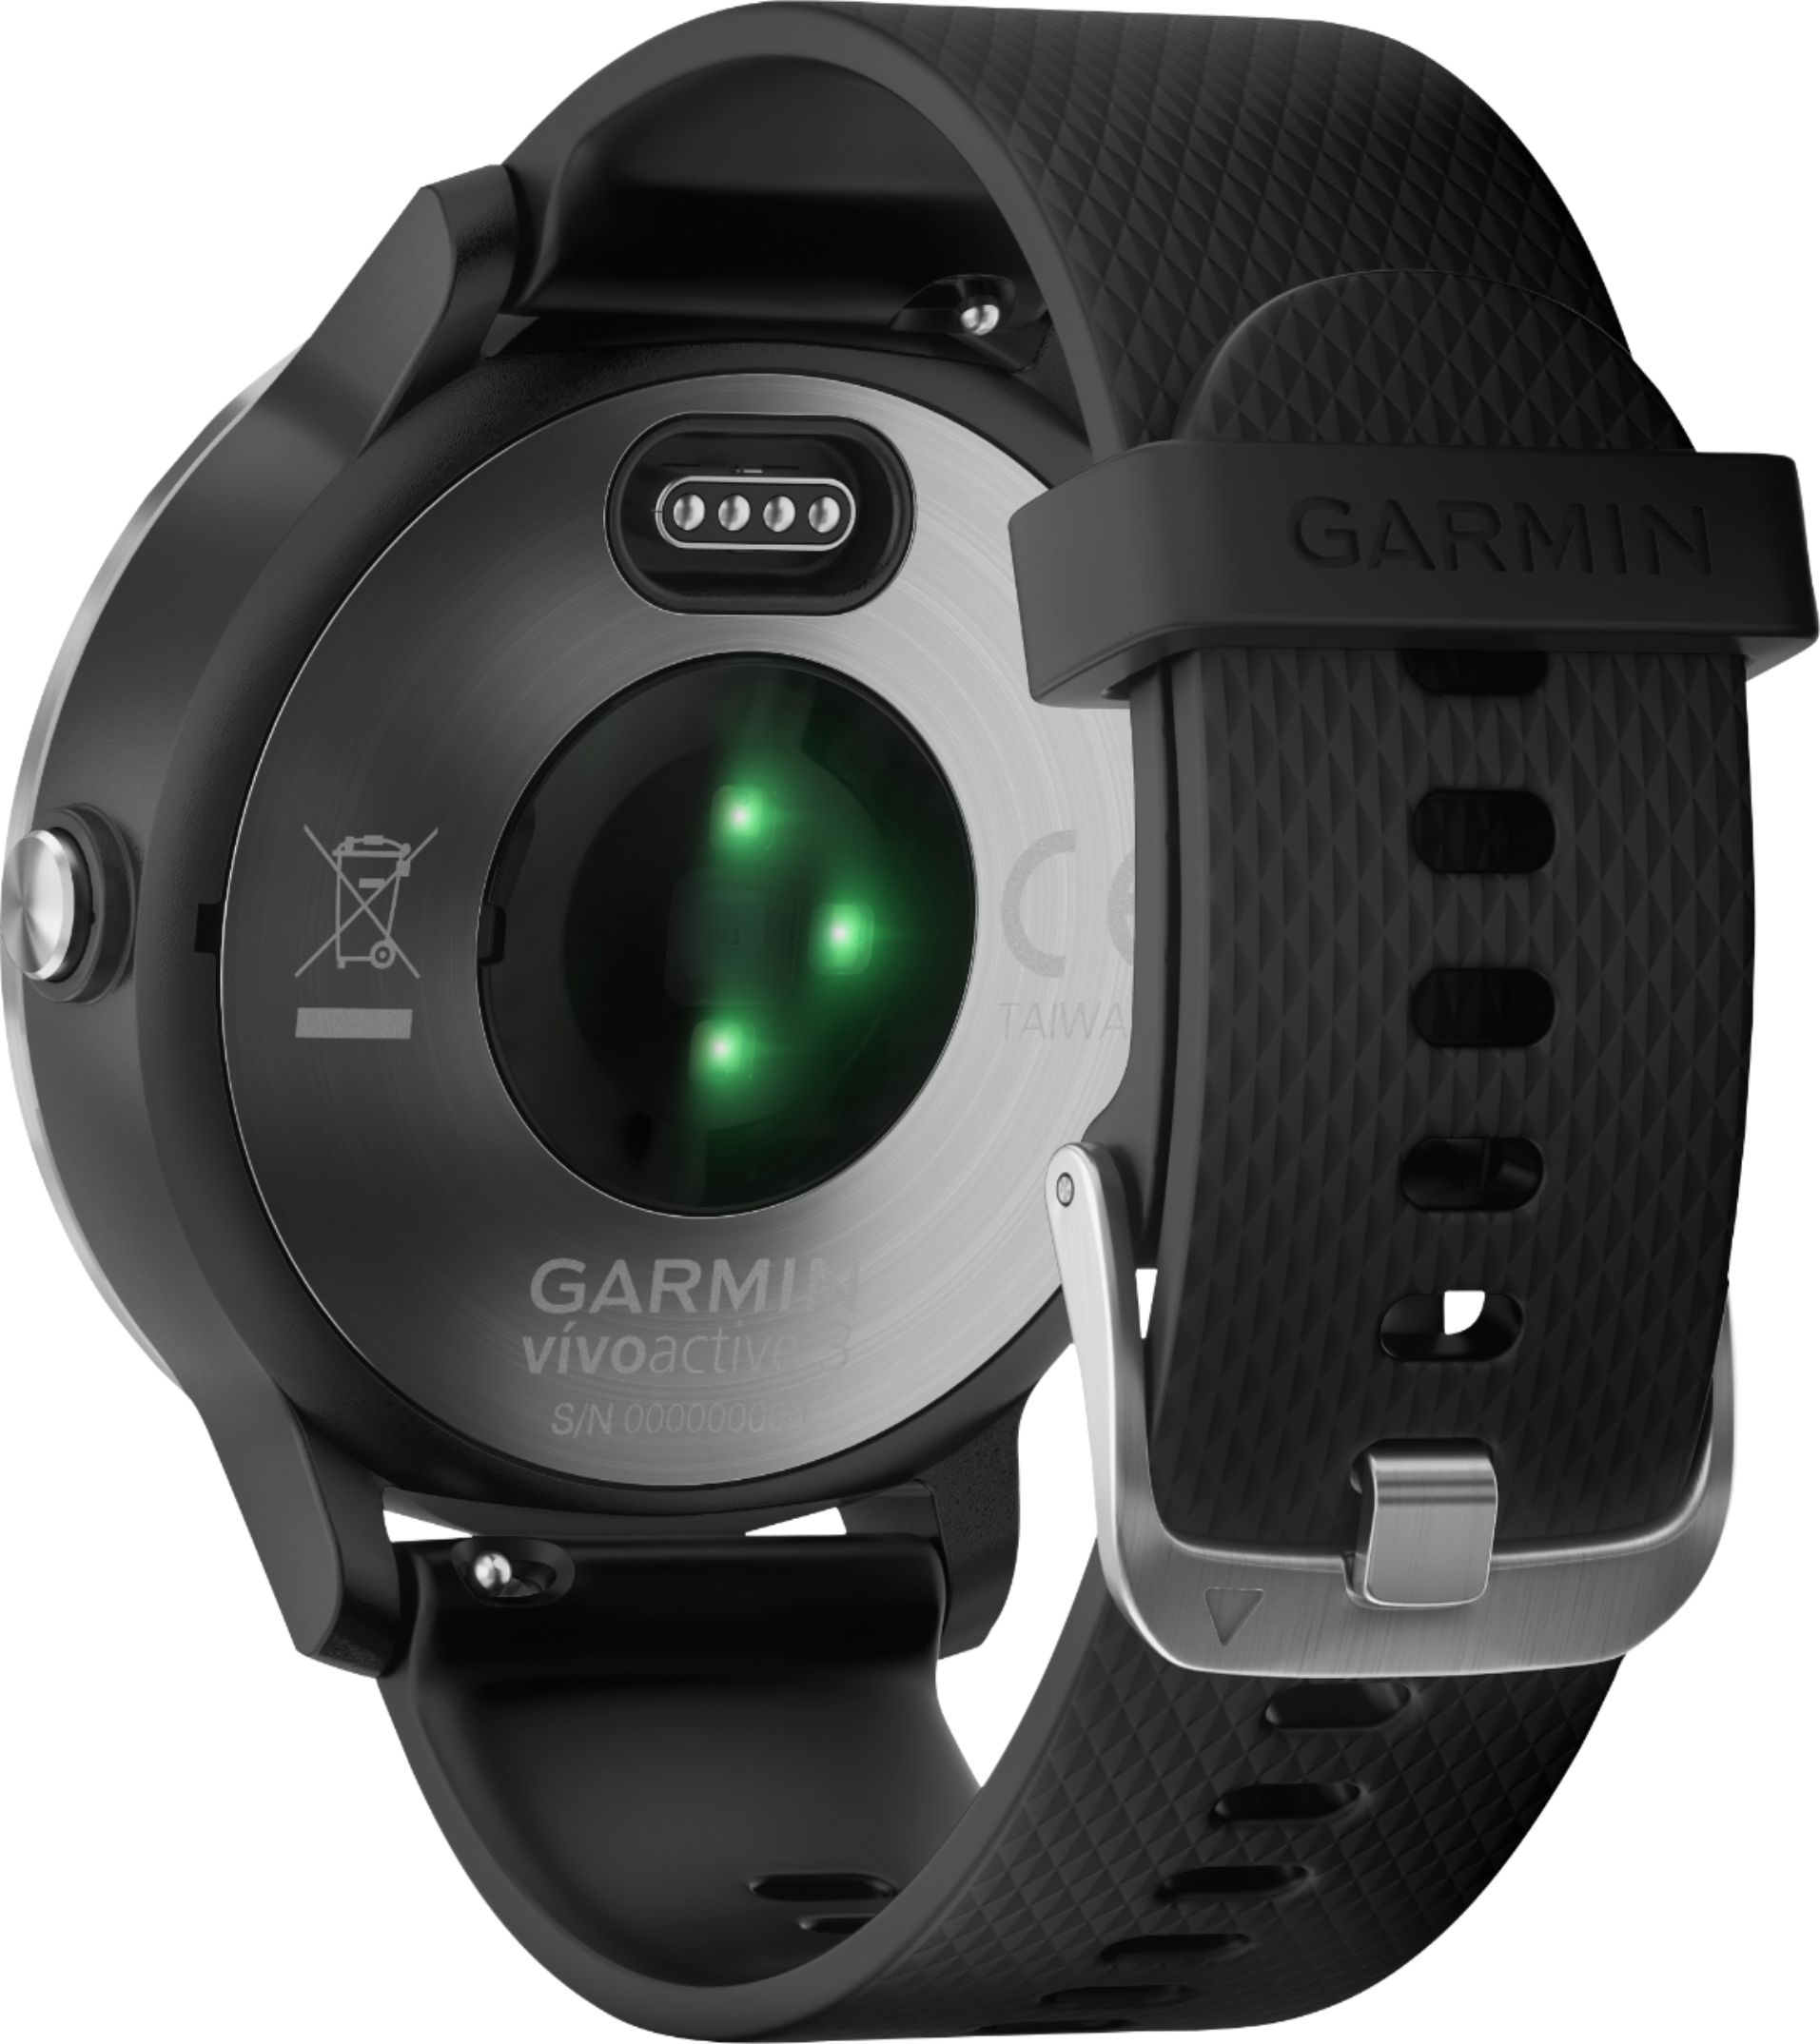 Back View: Garmin - vívoactive 3 Smartwatch - Stainless steel